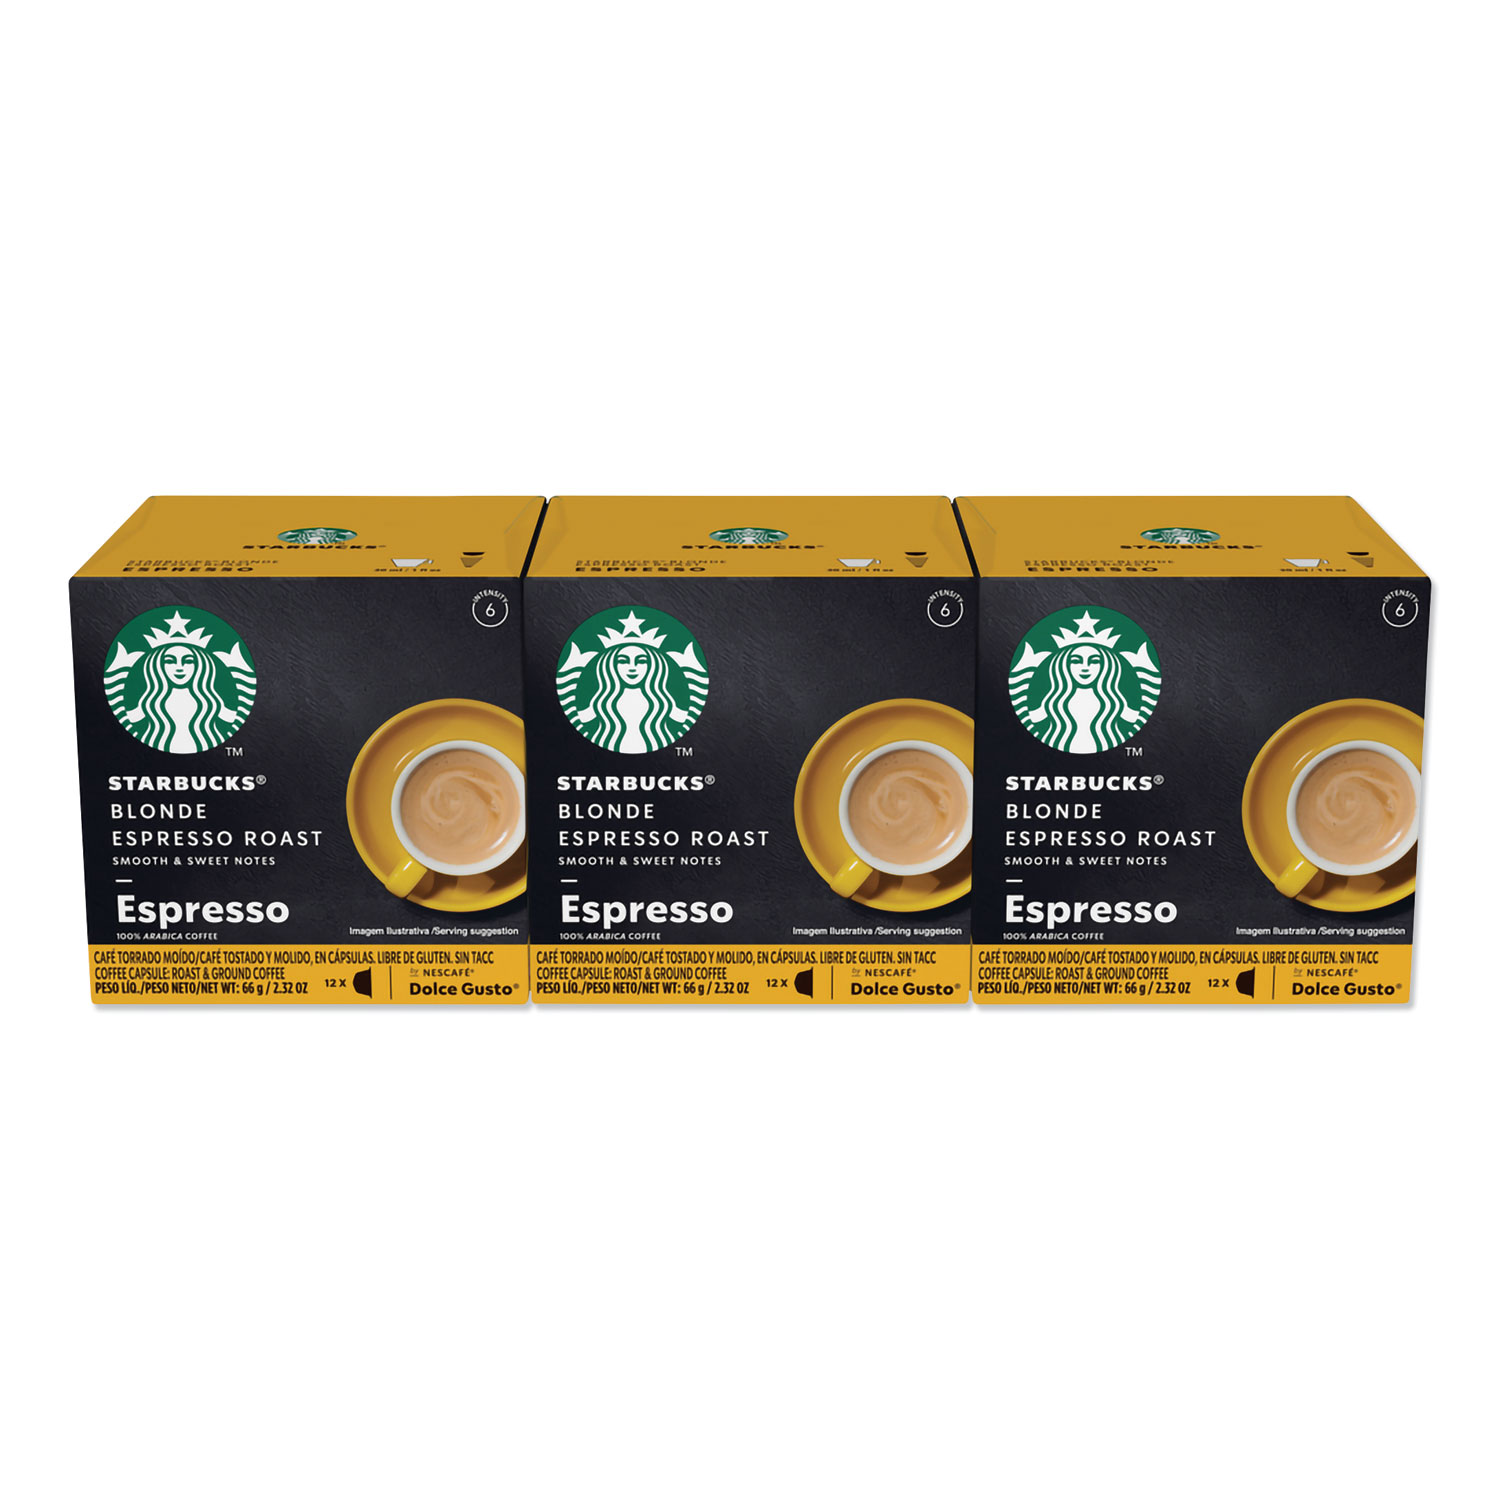  NESCAFÉ Dolce Gusto 94333 Starbucks Coffee Capsules, Blonde Espresso Roast, 36/Carton (NES94333) 